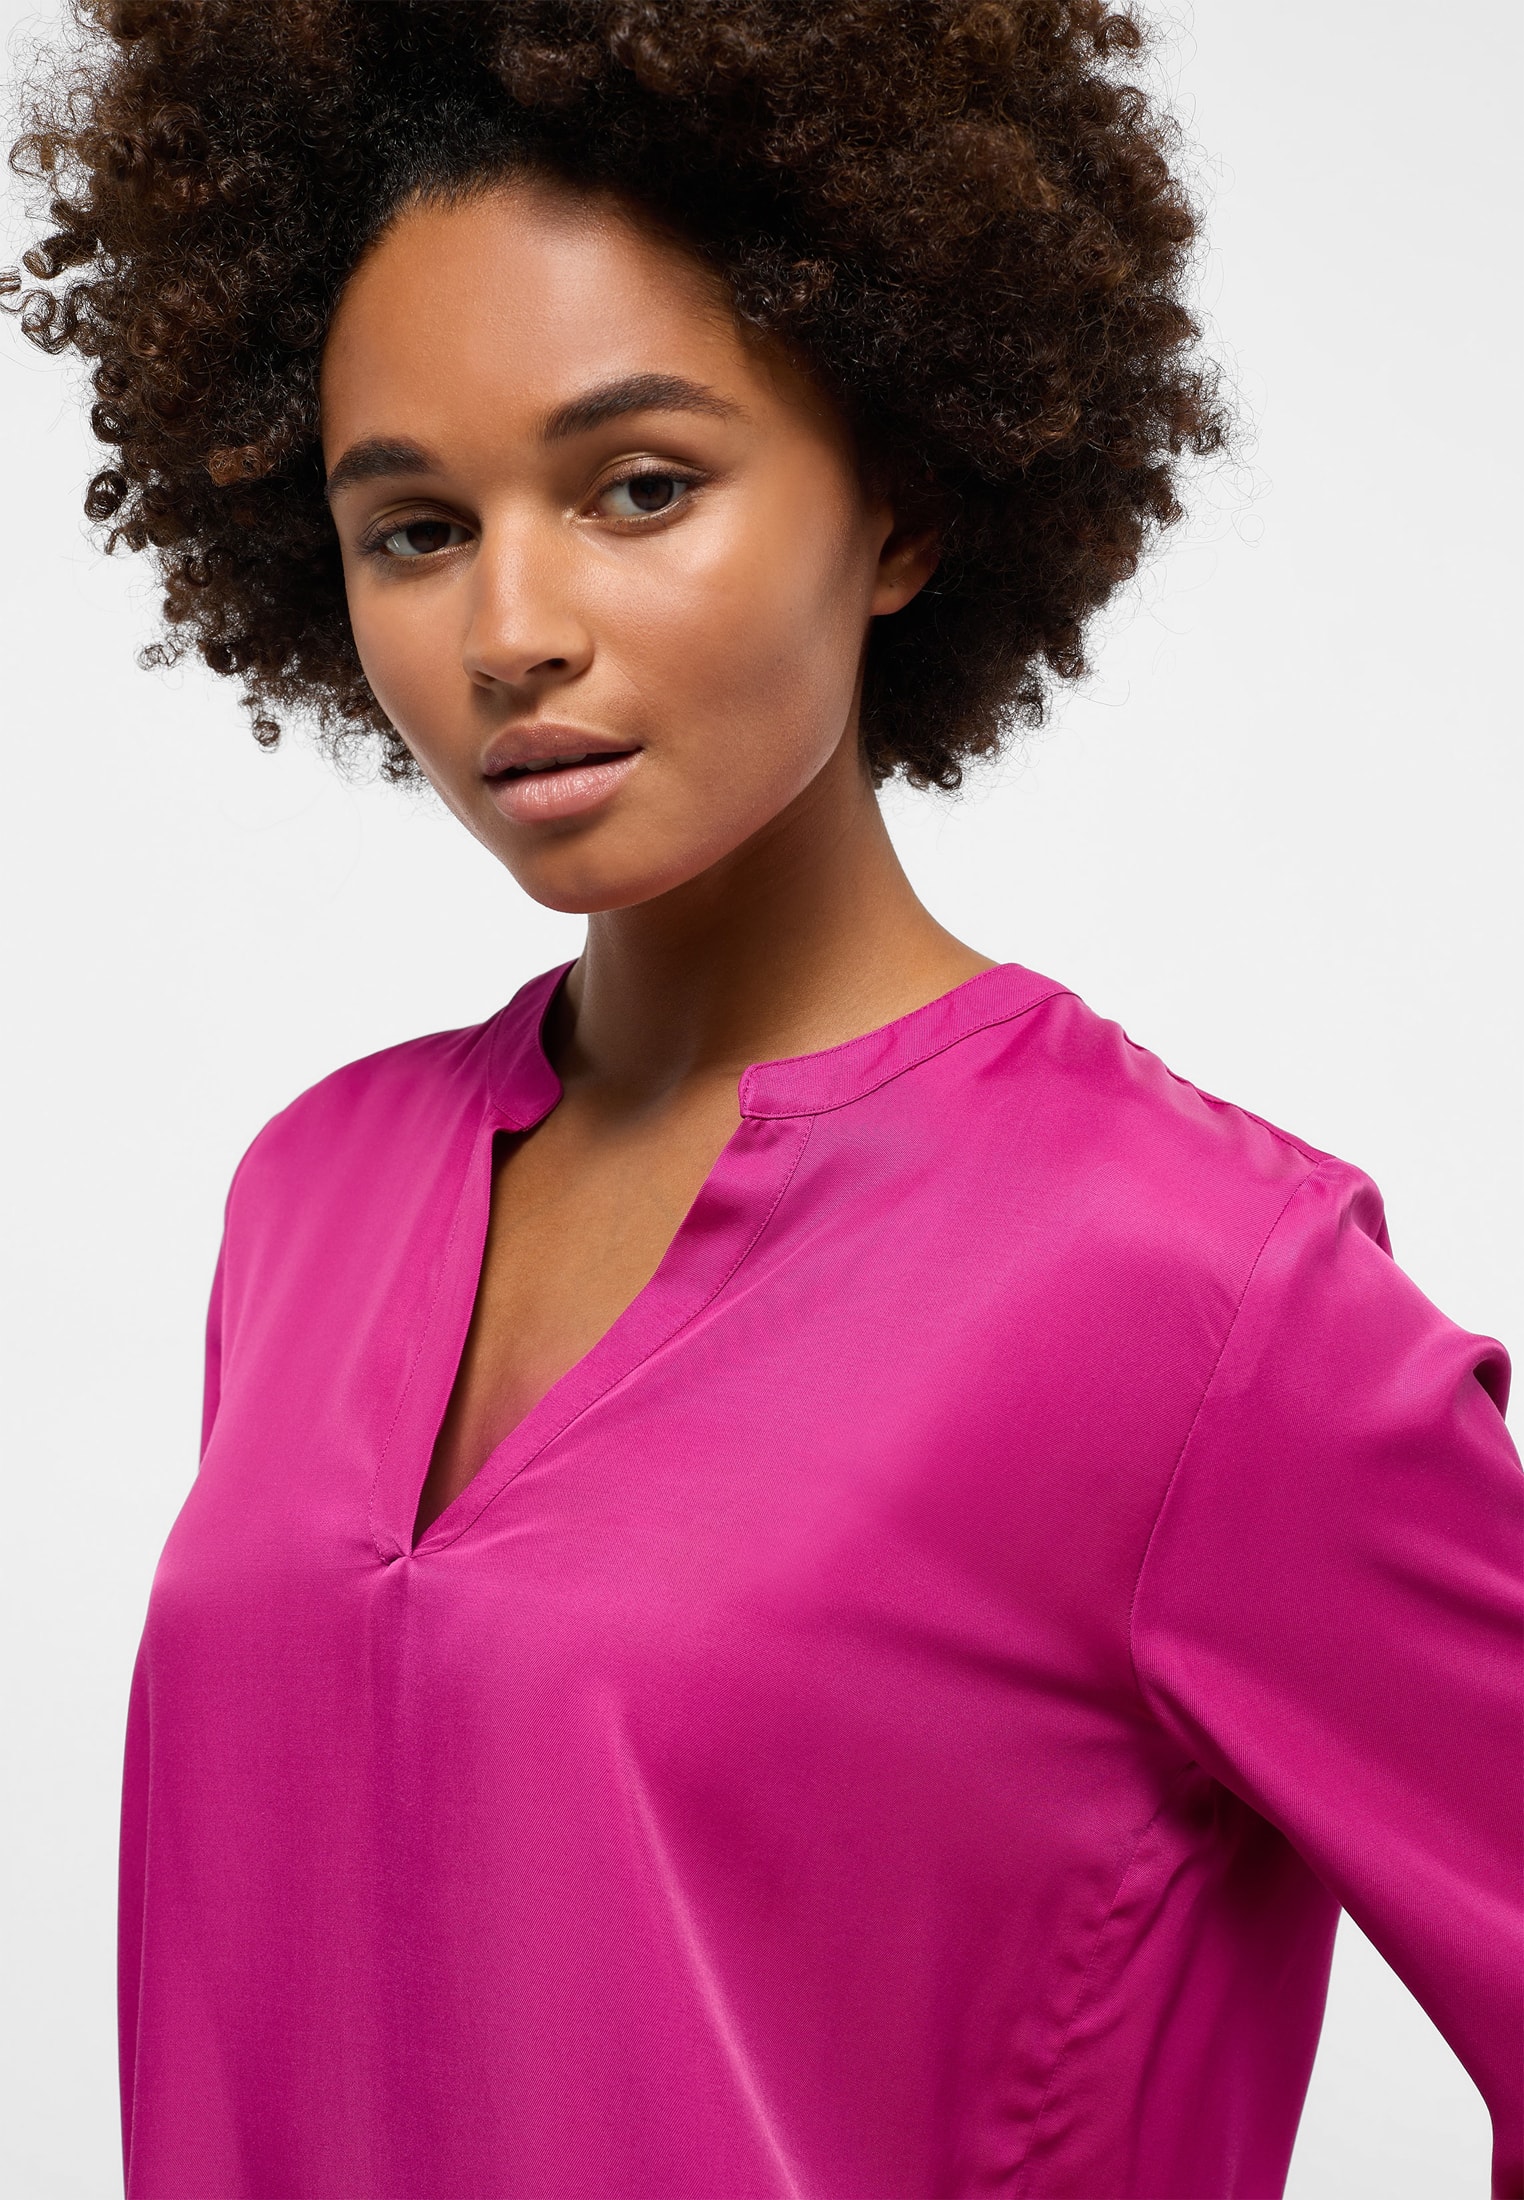 Langarm 2BL00329-15-31-34-1/1 | | | Bluse pink vibrant pink in vibrant Shirt | unifarben Viscose 34